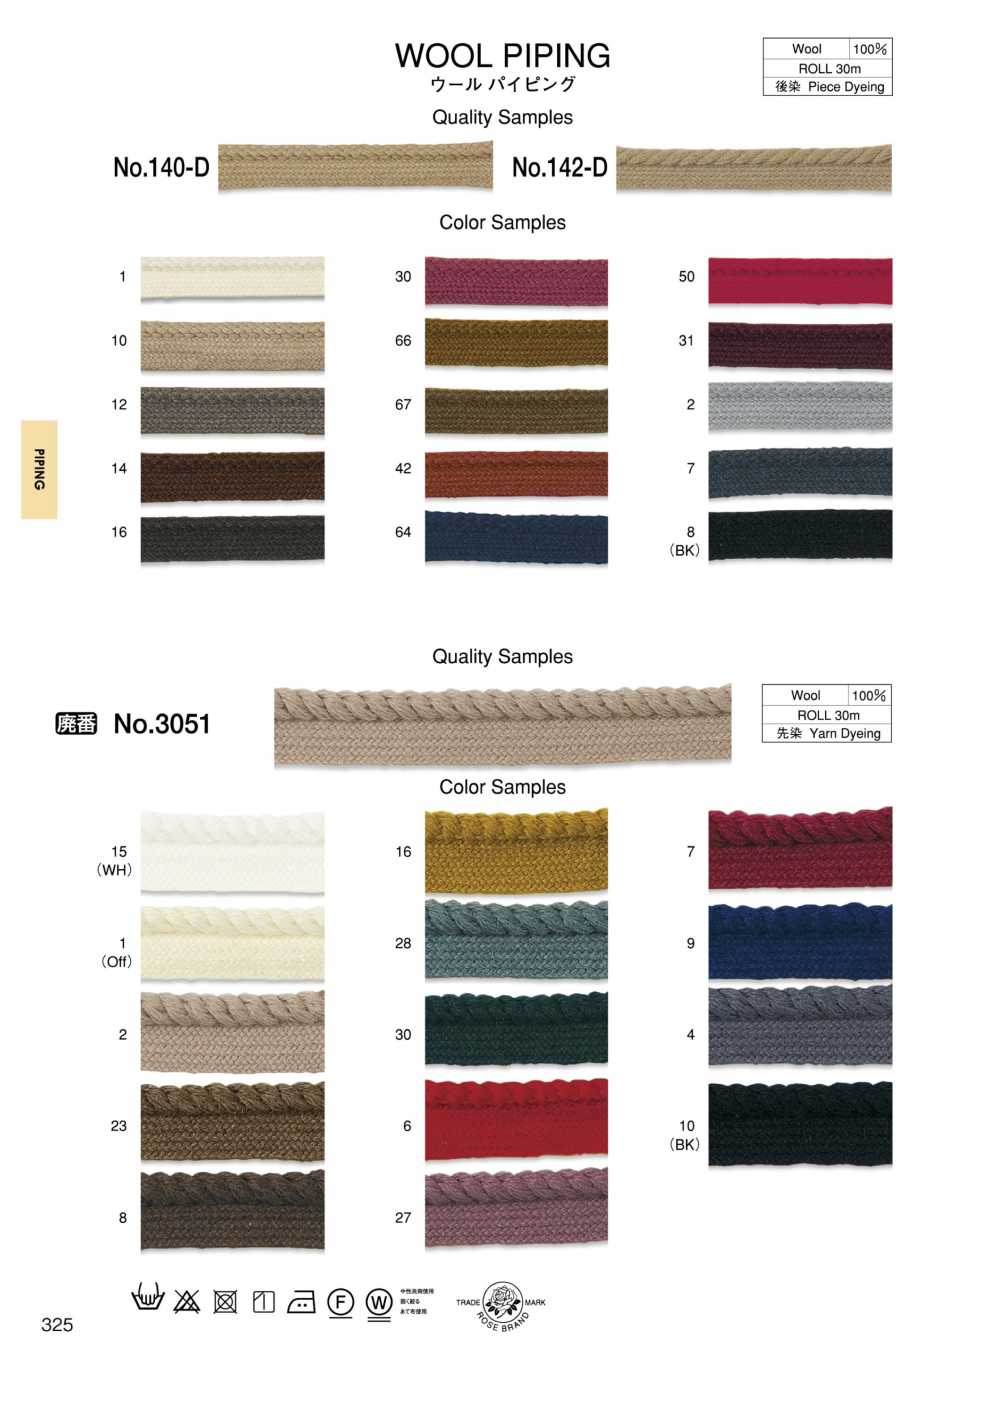 142-D Wool Piping[Ribbon Tape Cord] ROSE BRAND (Marushin)